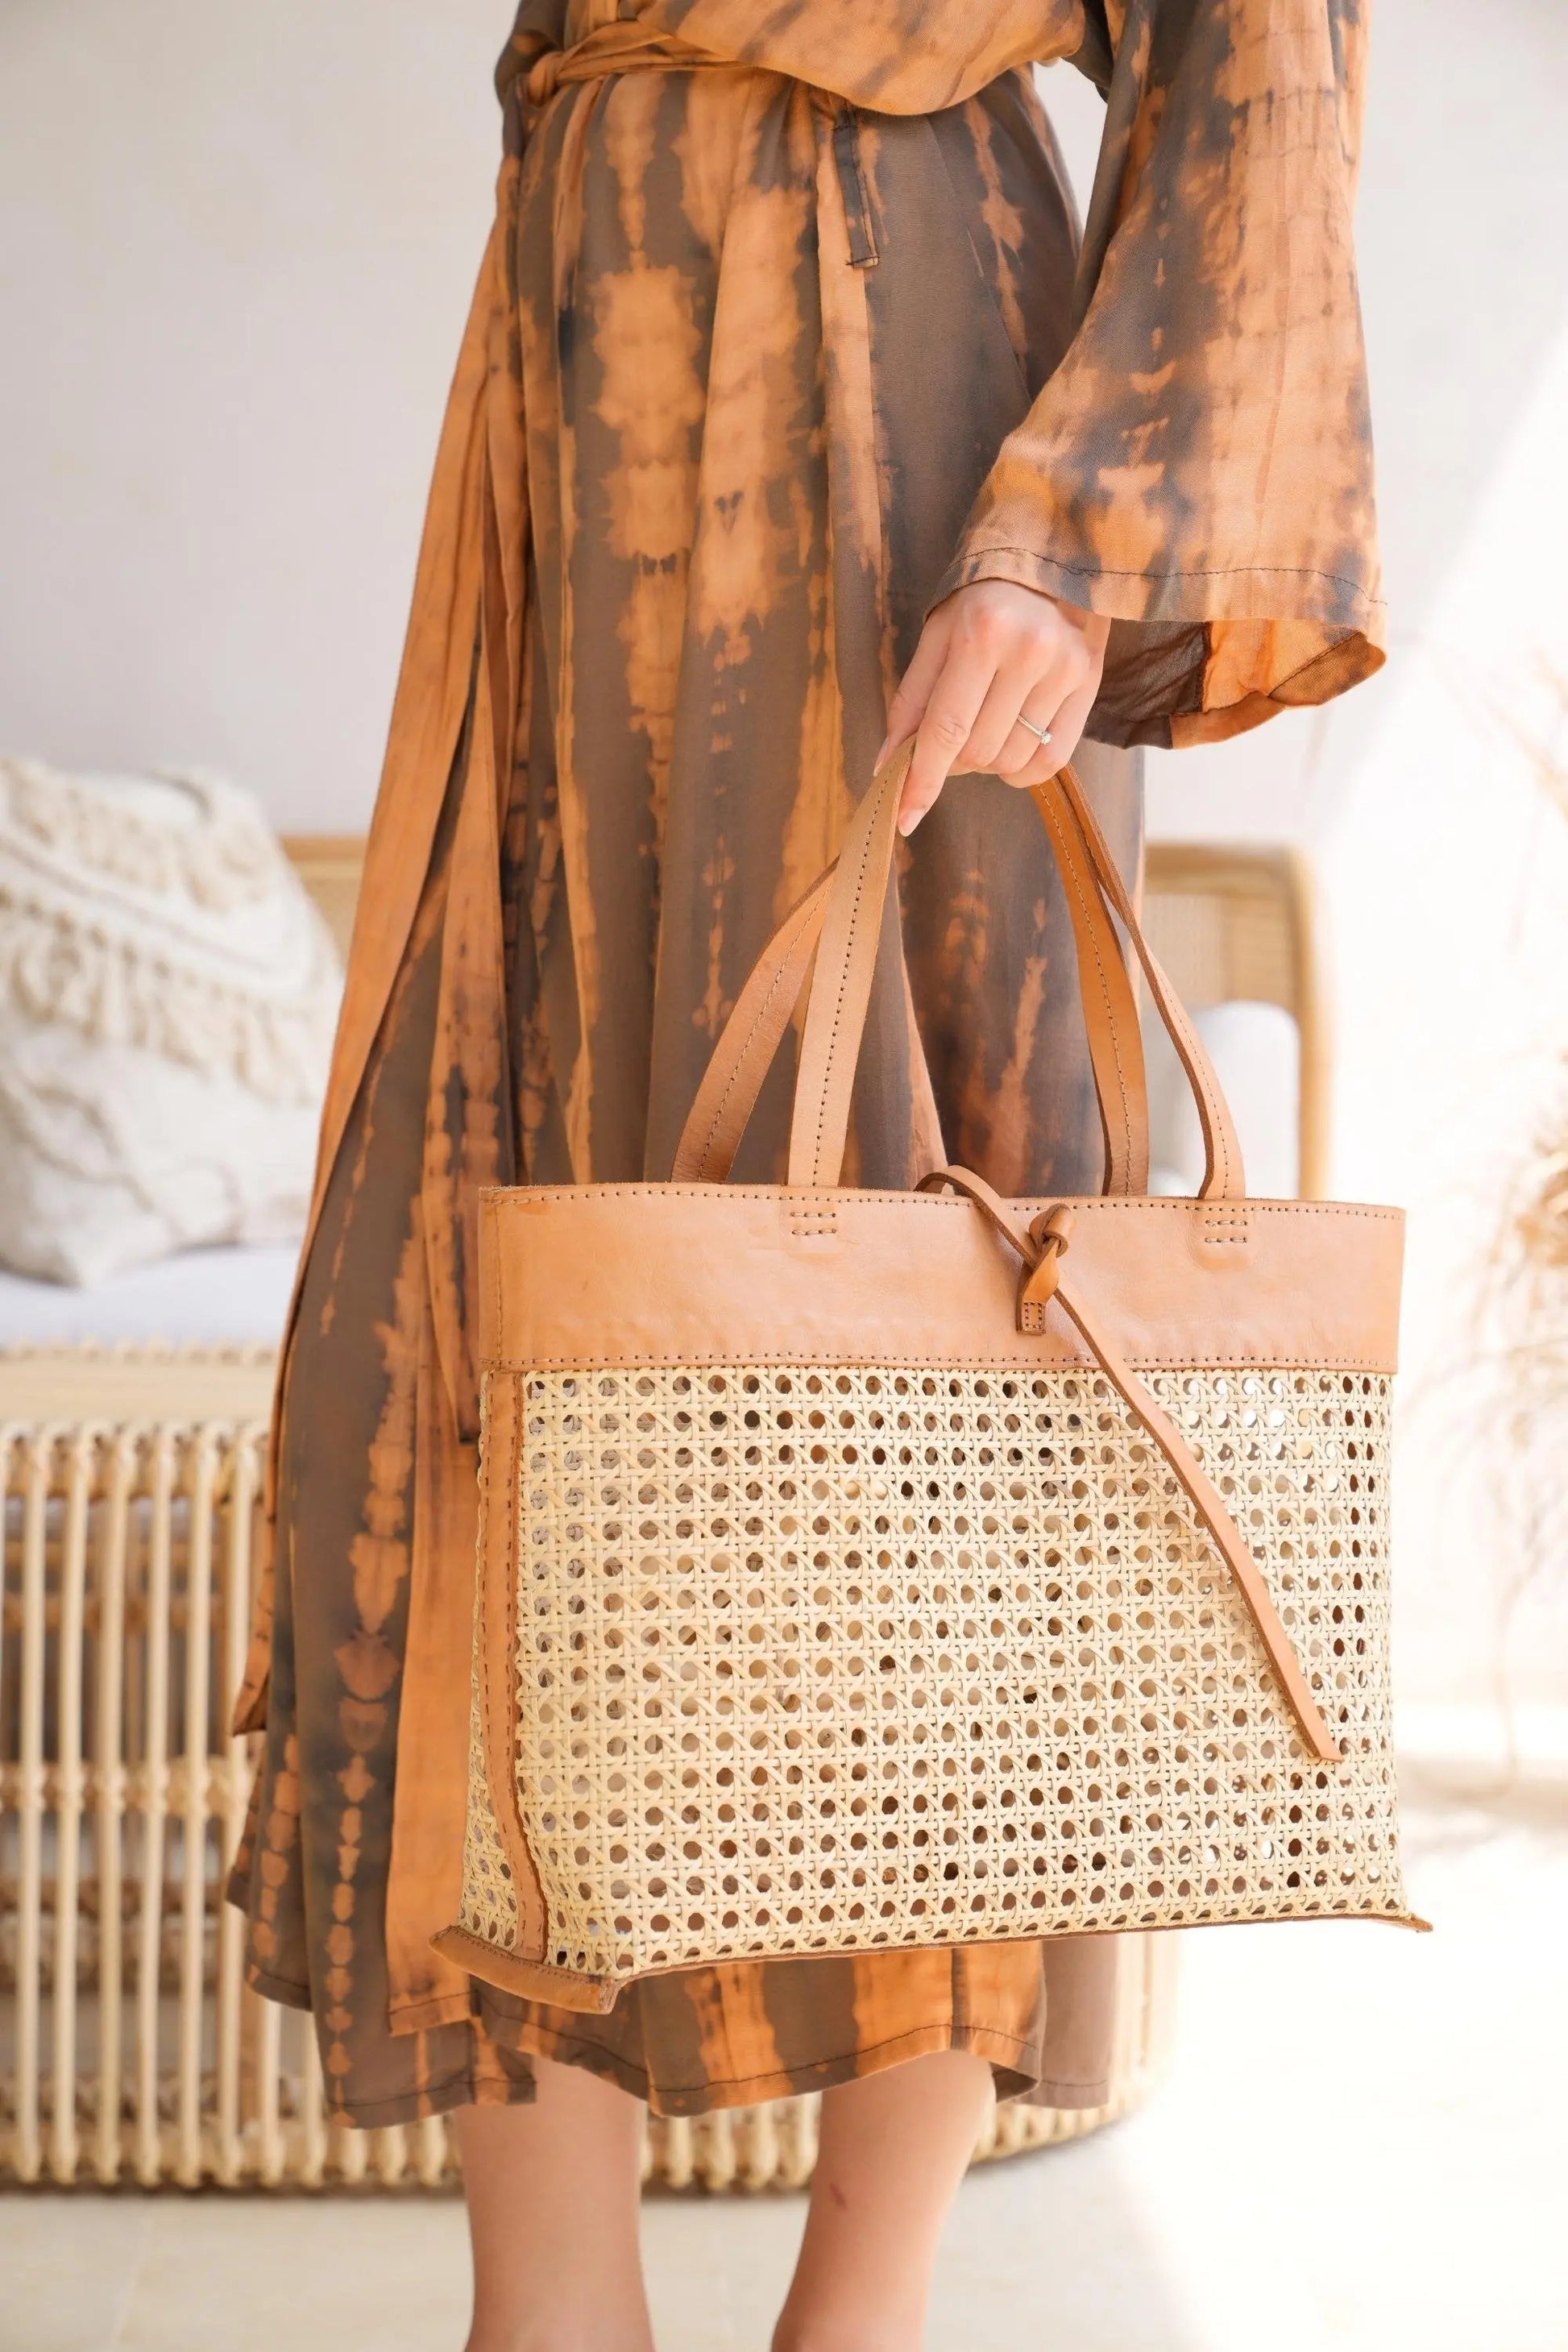 Woven Bag | Handmade in Bali